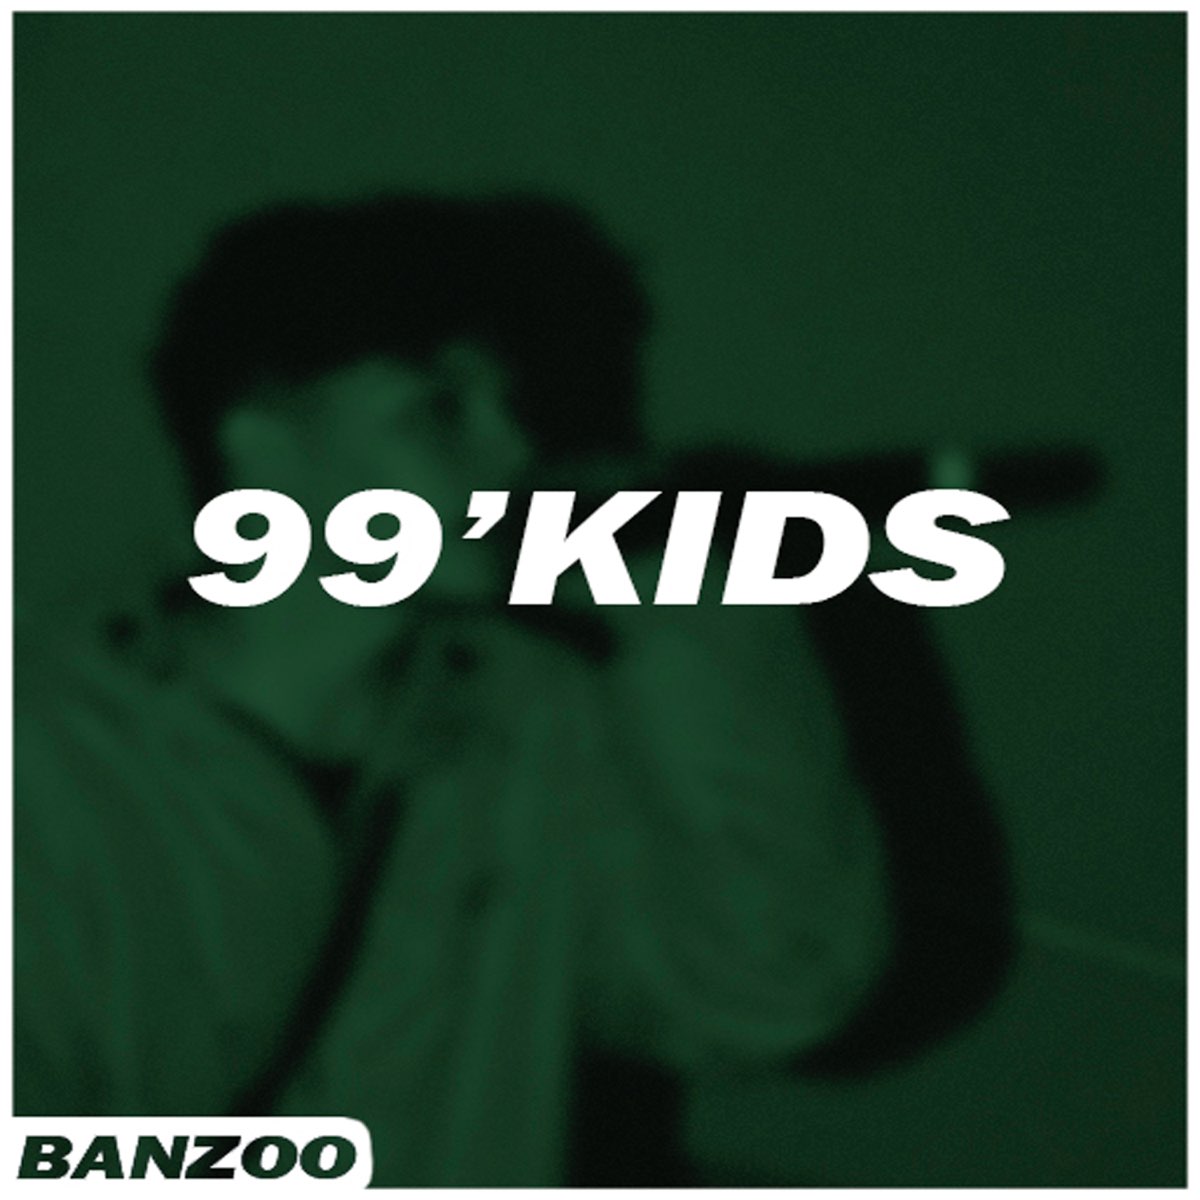 99 Kids - Single - Album by Banzoo - Apple Music